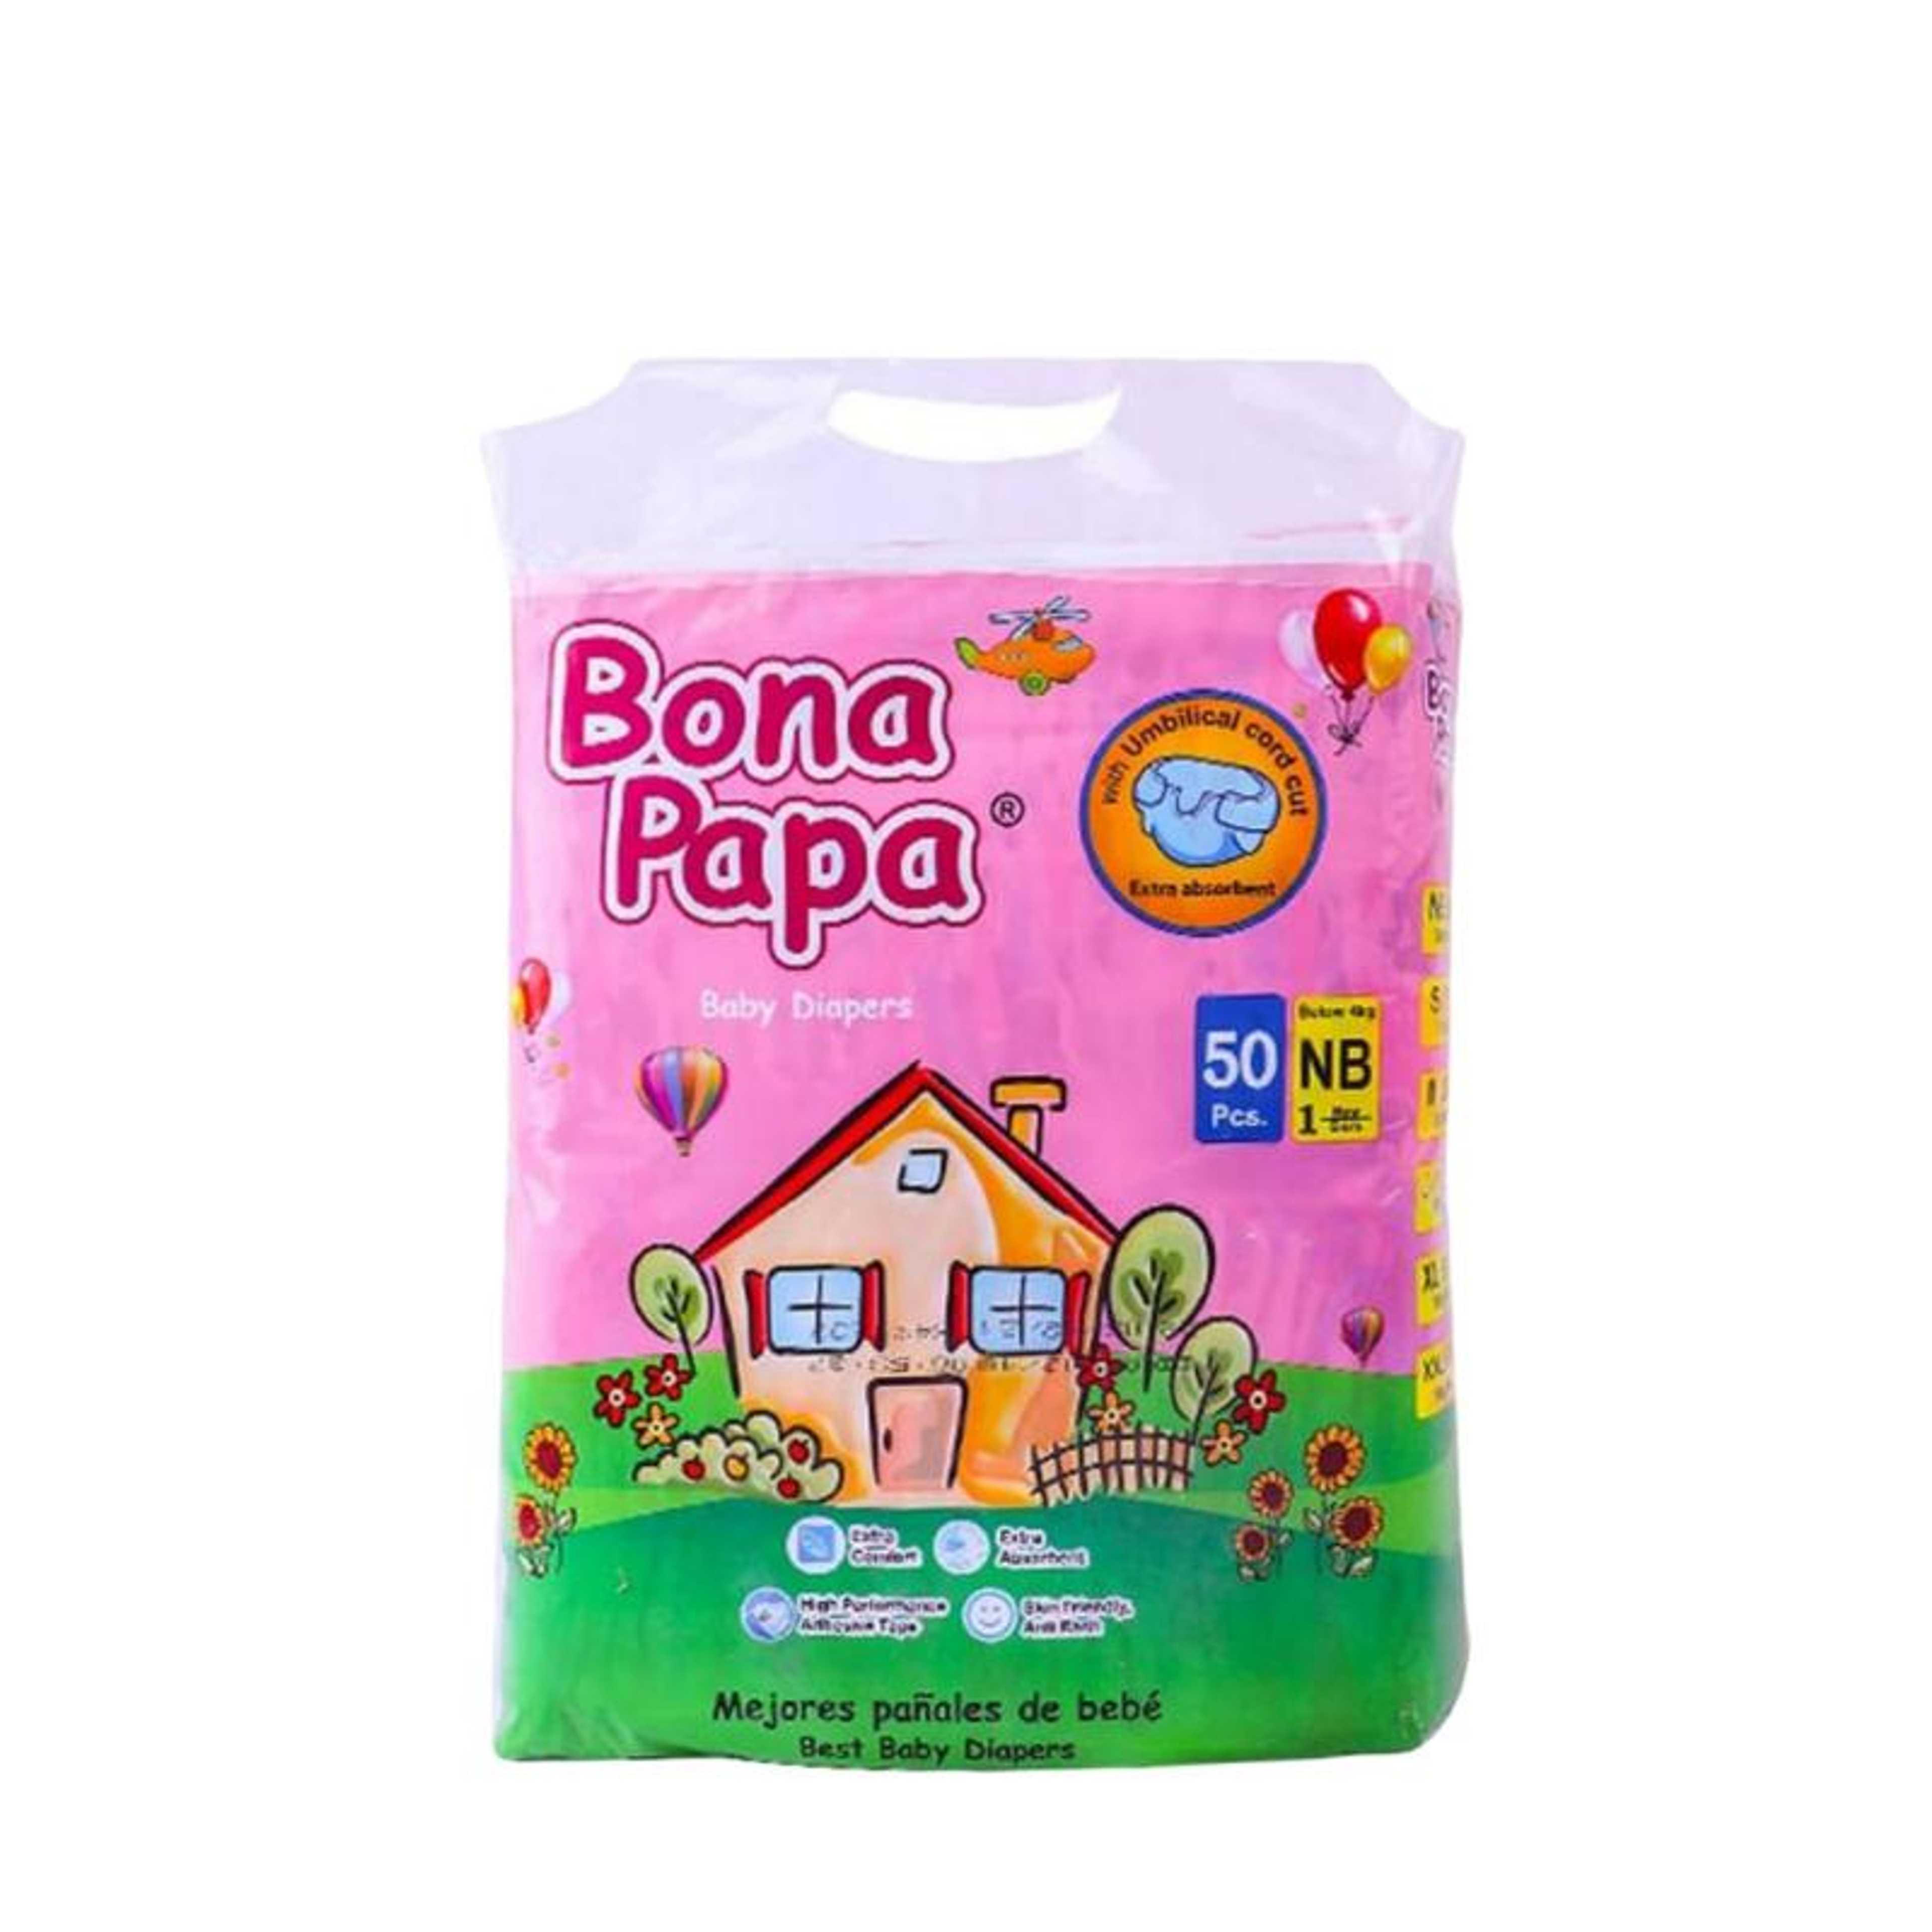 Bona Papa Plus Baby Diaper 50 Pcs - Size Newborn